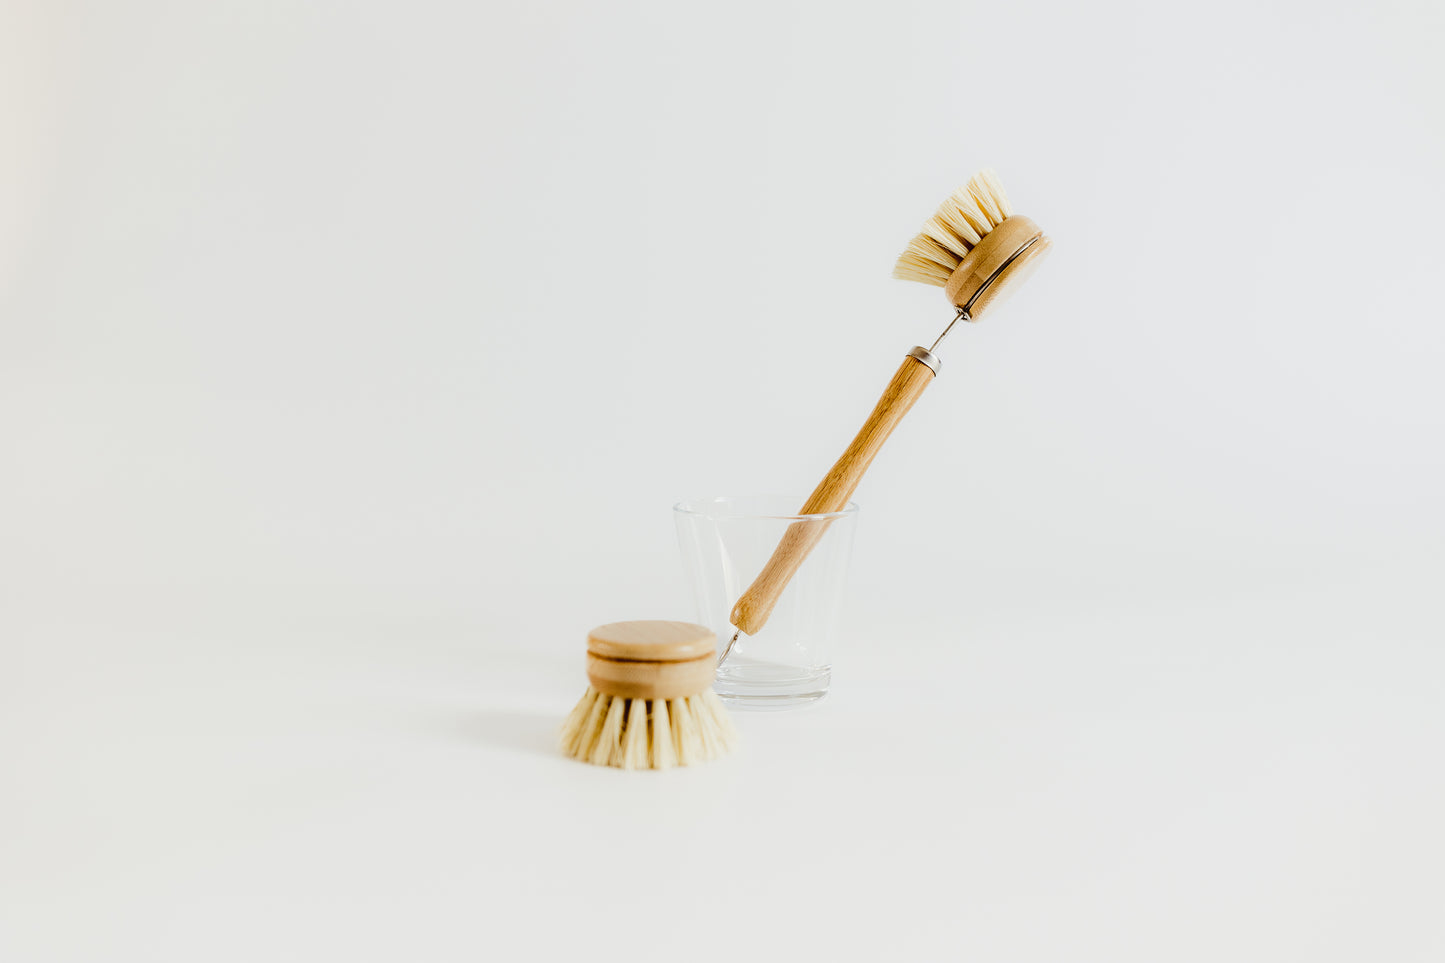 Long Handle Dish Brush